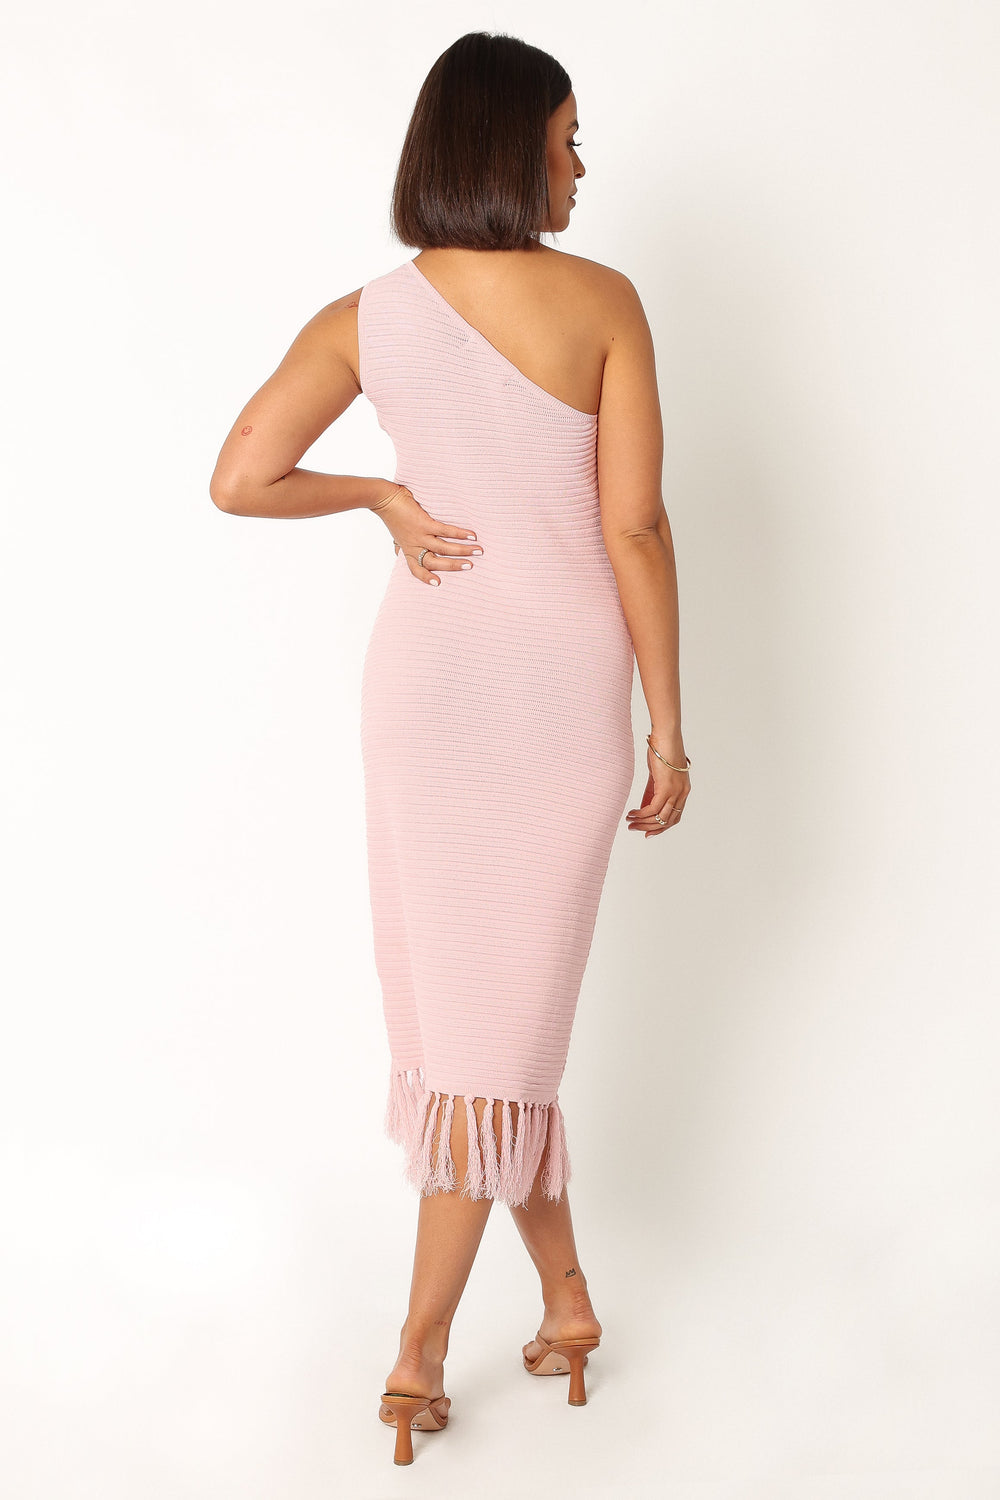 DRESSES @Winne One Shoulder Knit Dress - Pink